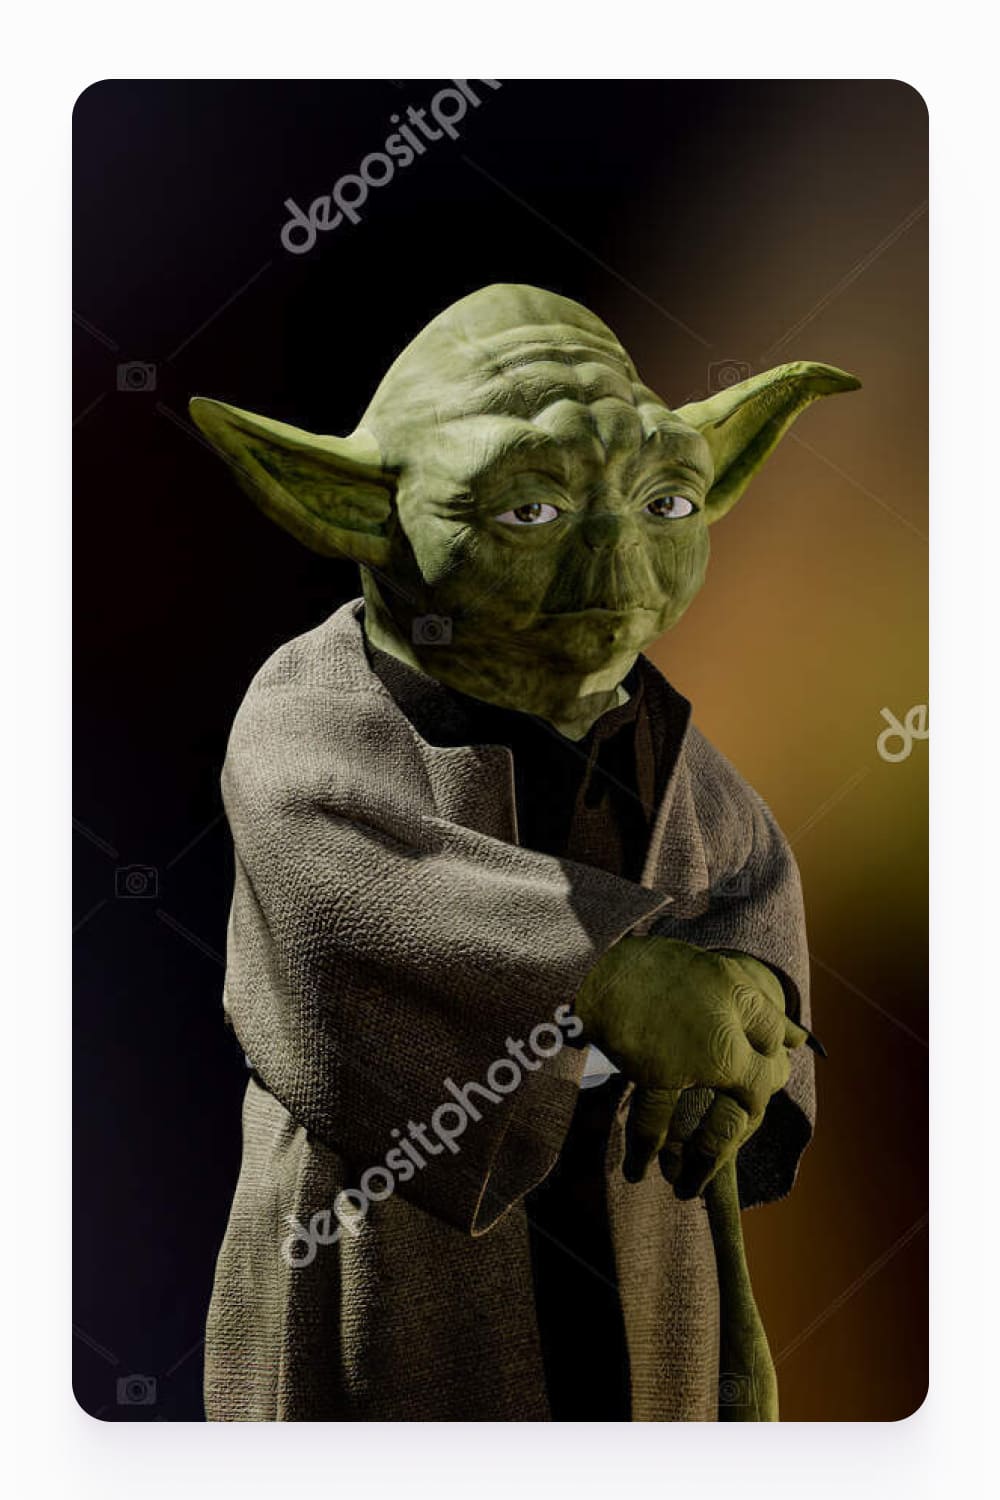 3D Master Yoda with sad face.